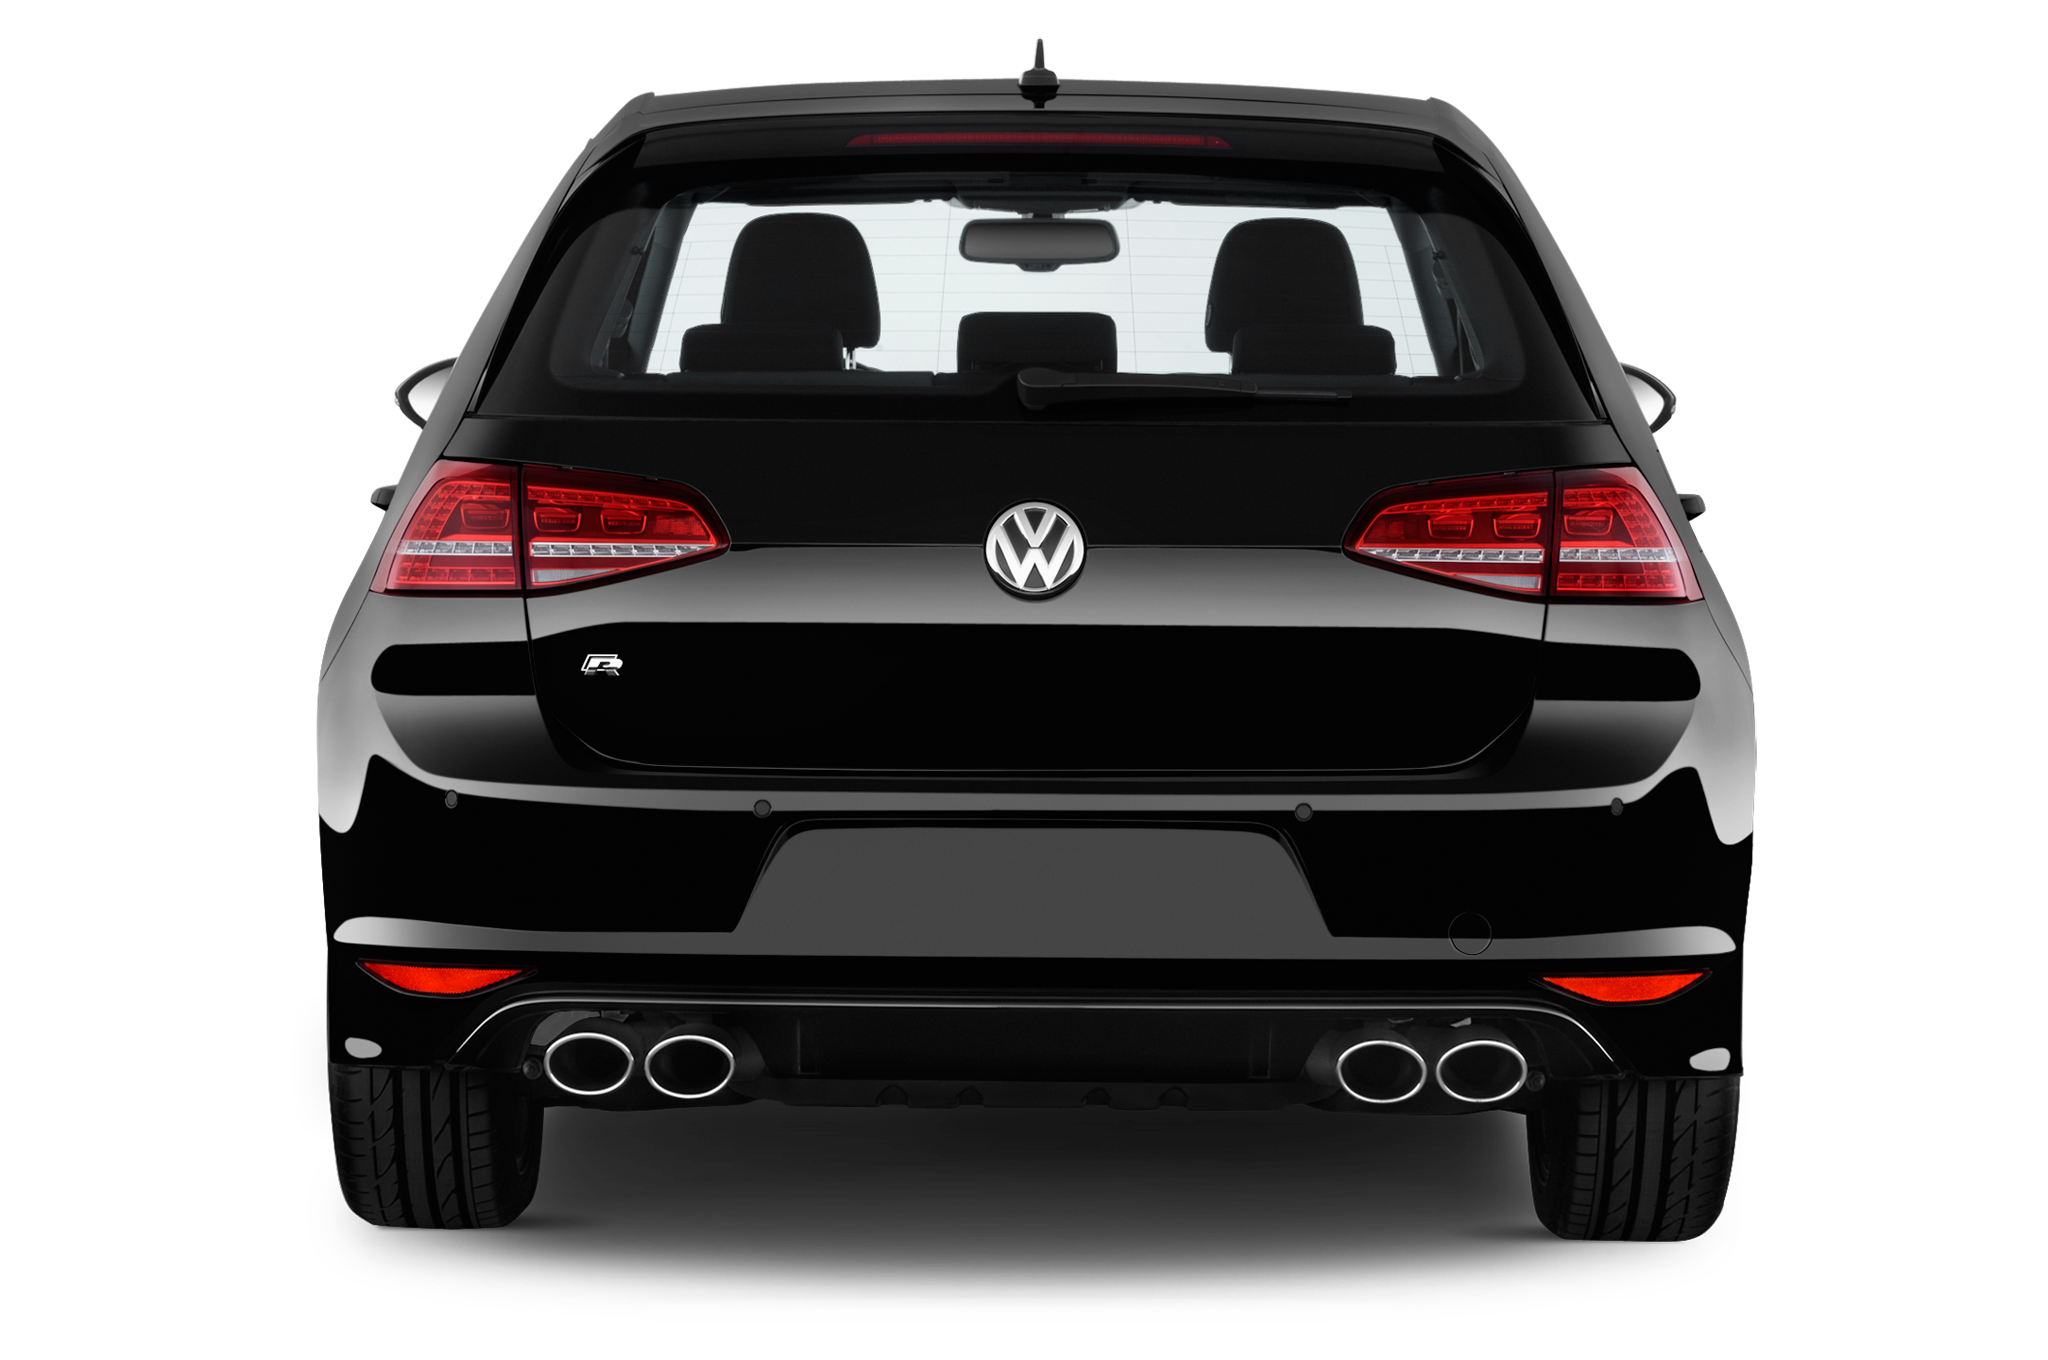 Volkswagen Golf SV PNG Photo Image